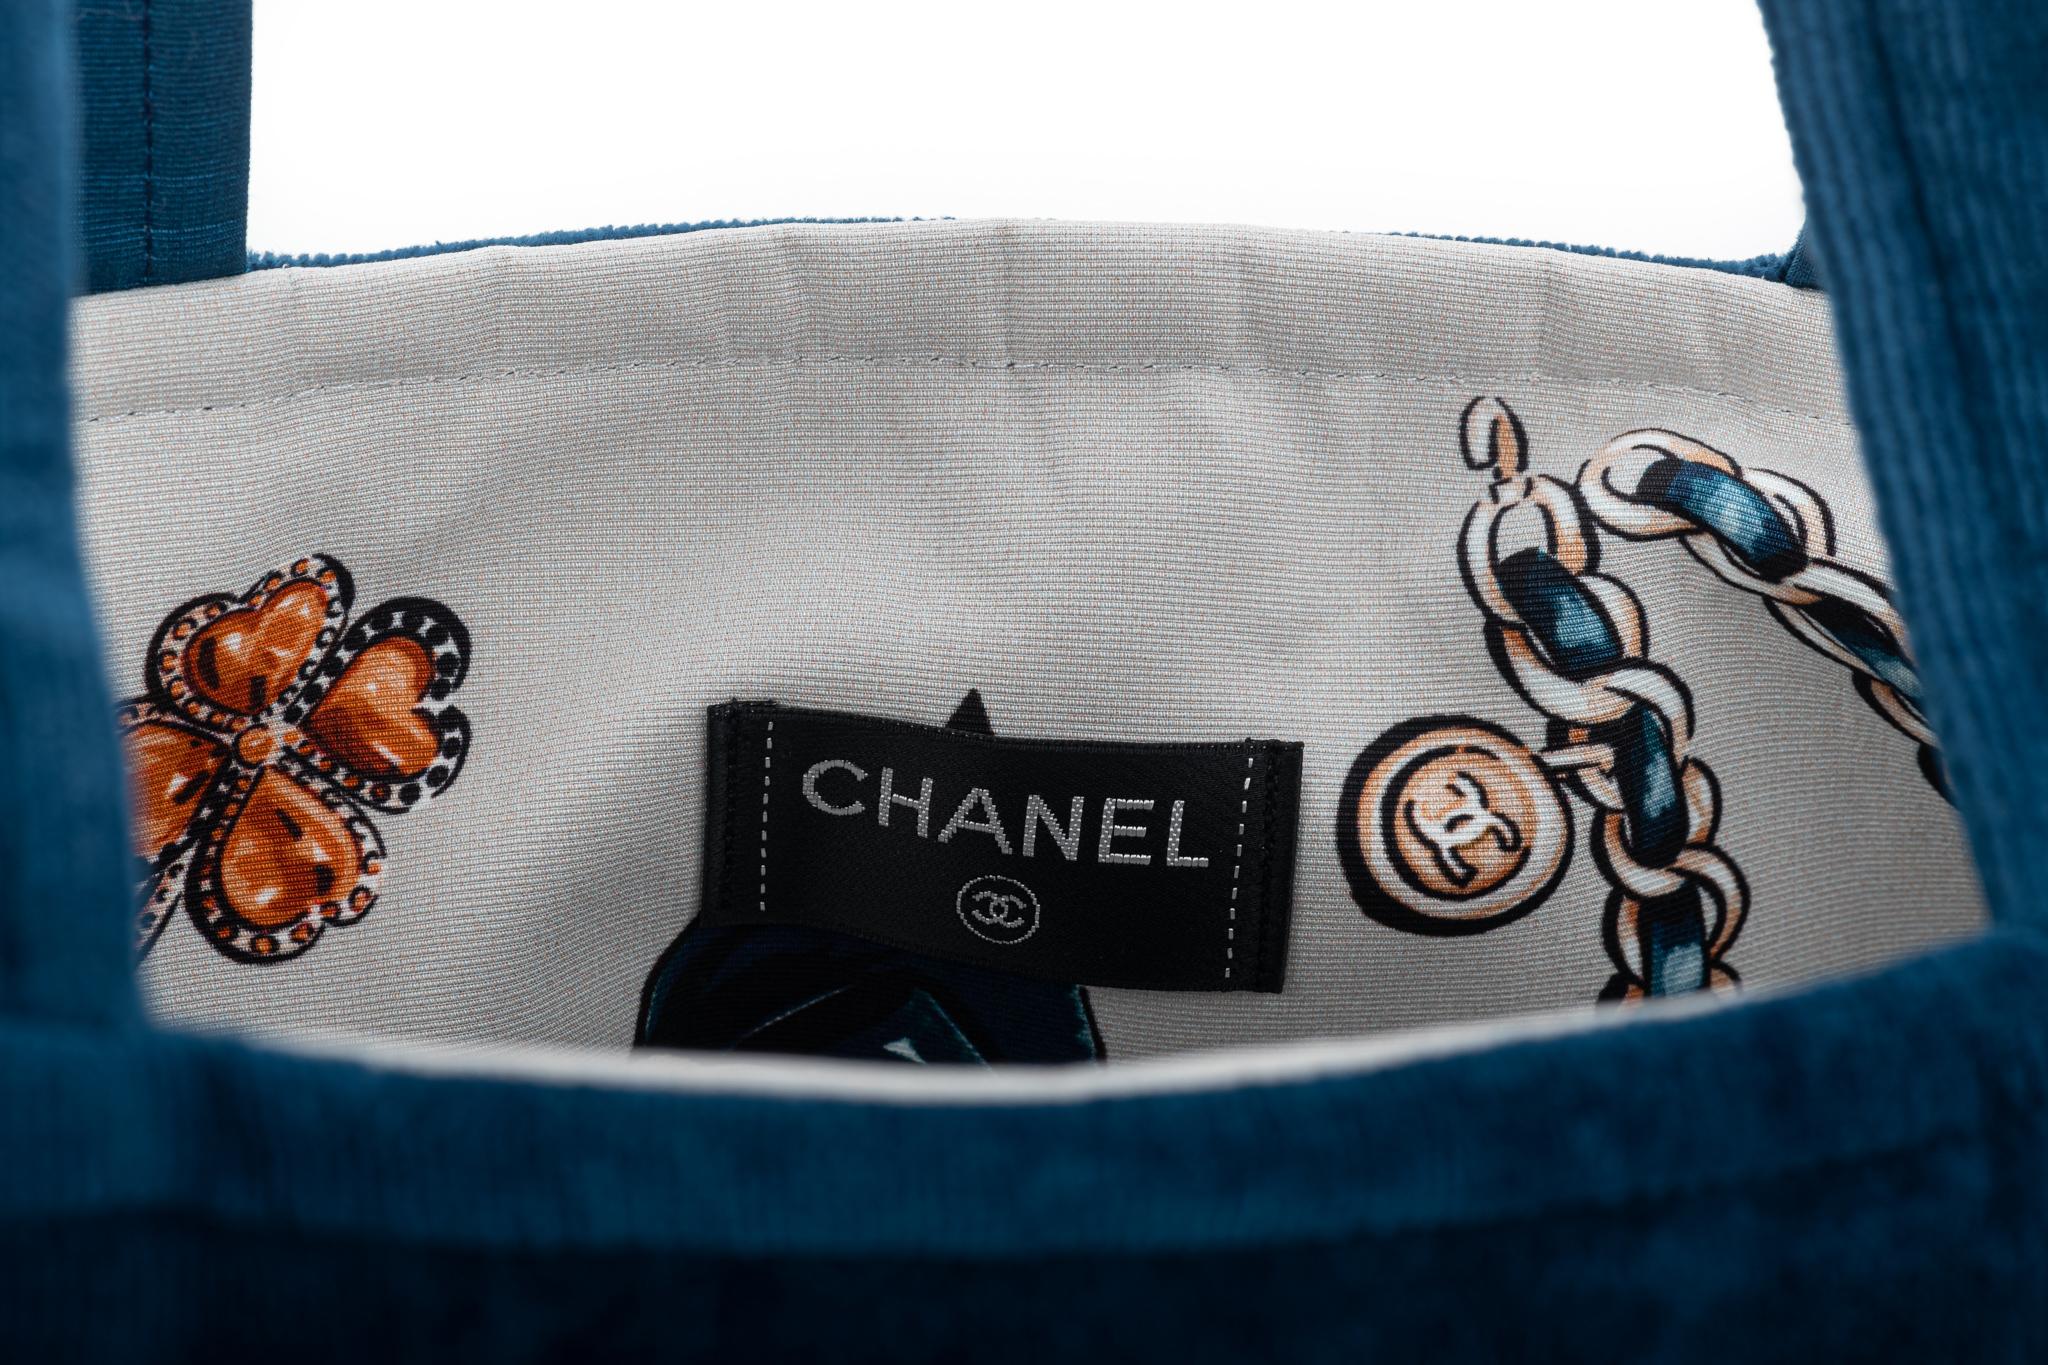 New Chanel Blue Beach Bag Towel Set Iconic Design 3